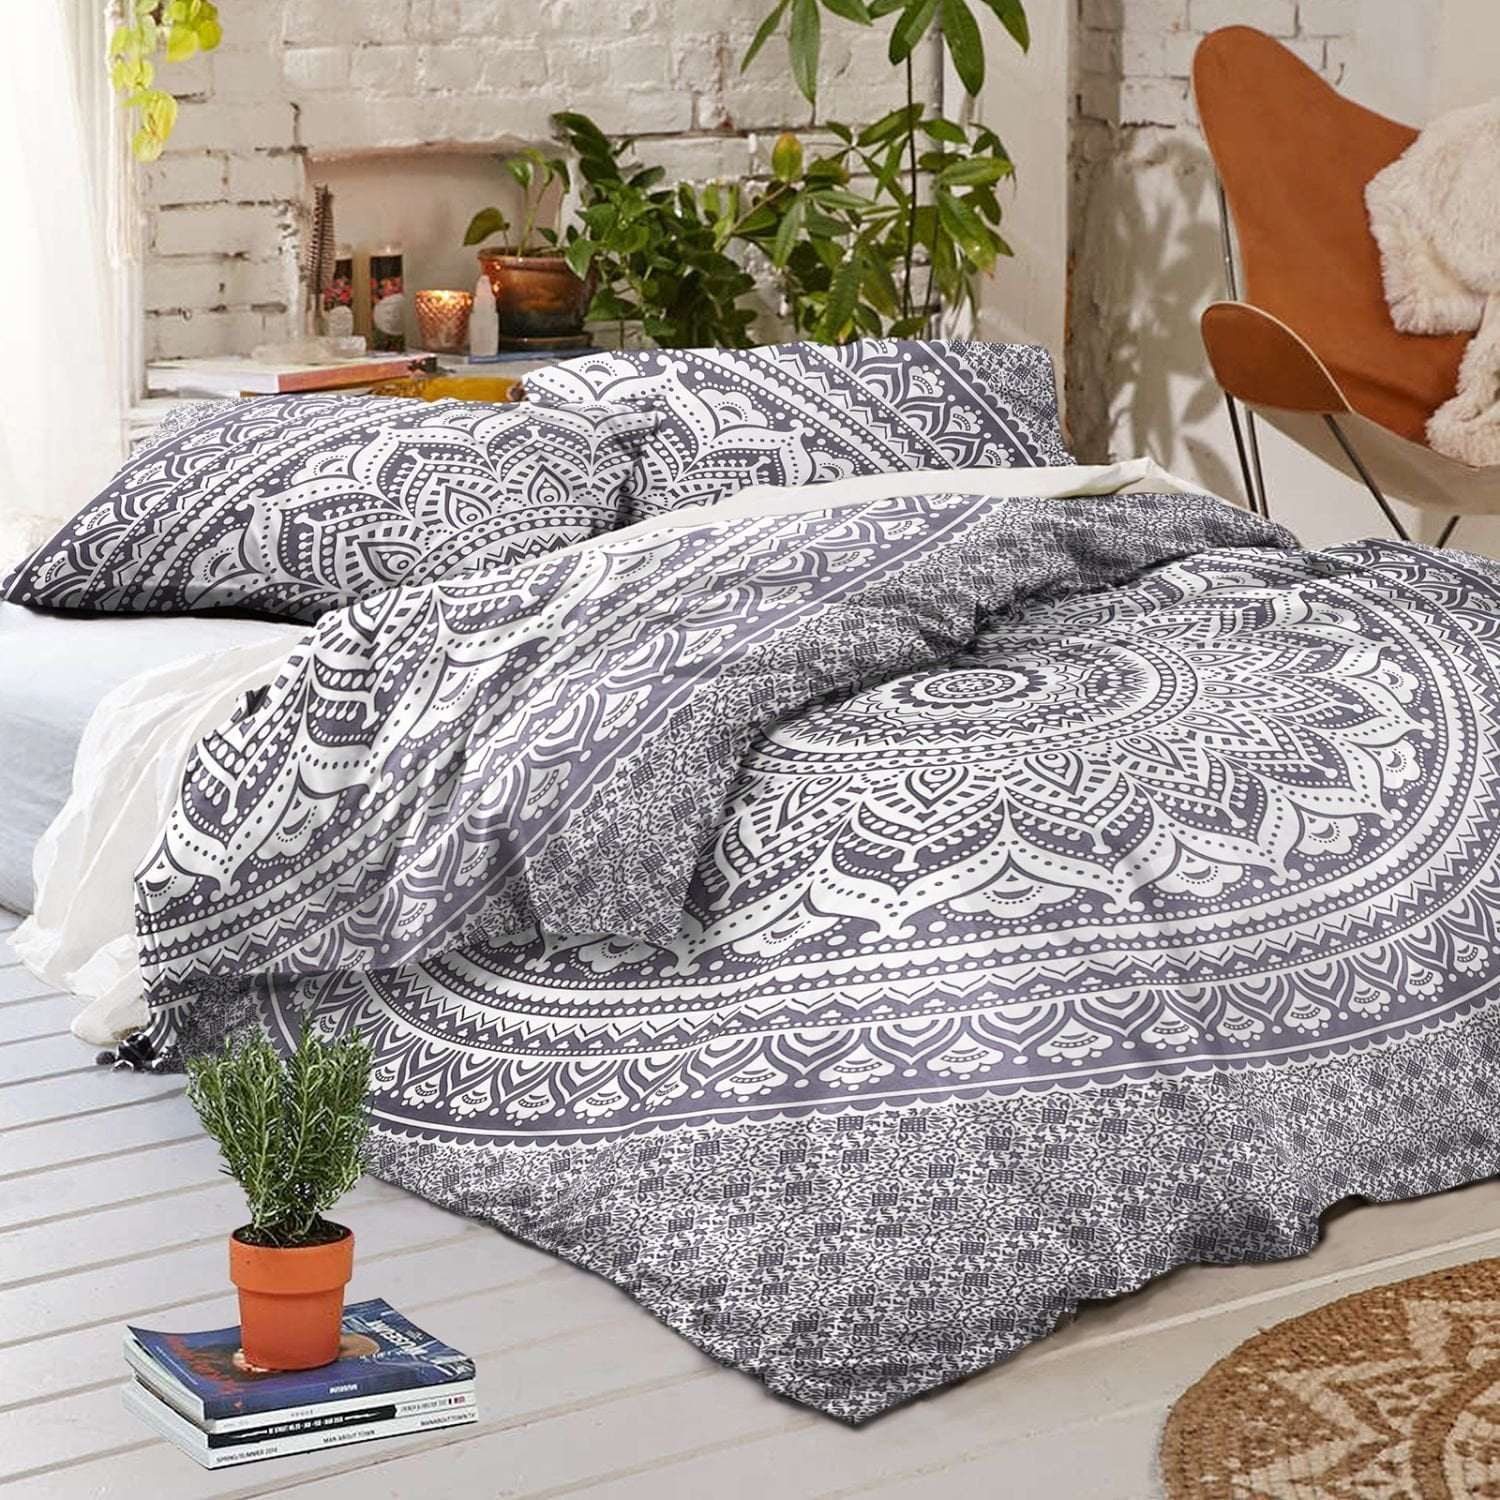 Mandala Queen Size Duvet Cover Reversible Bohemian Quilt Cotton With Pillows 